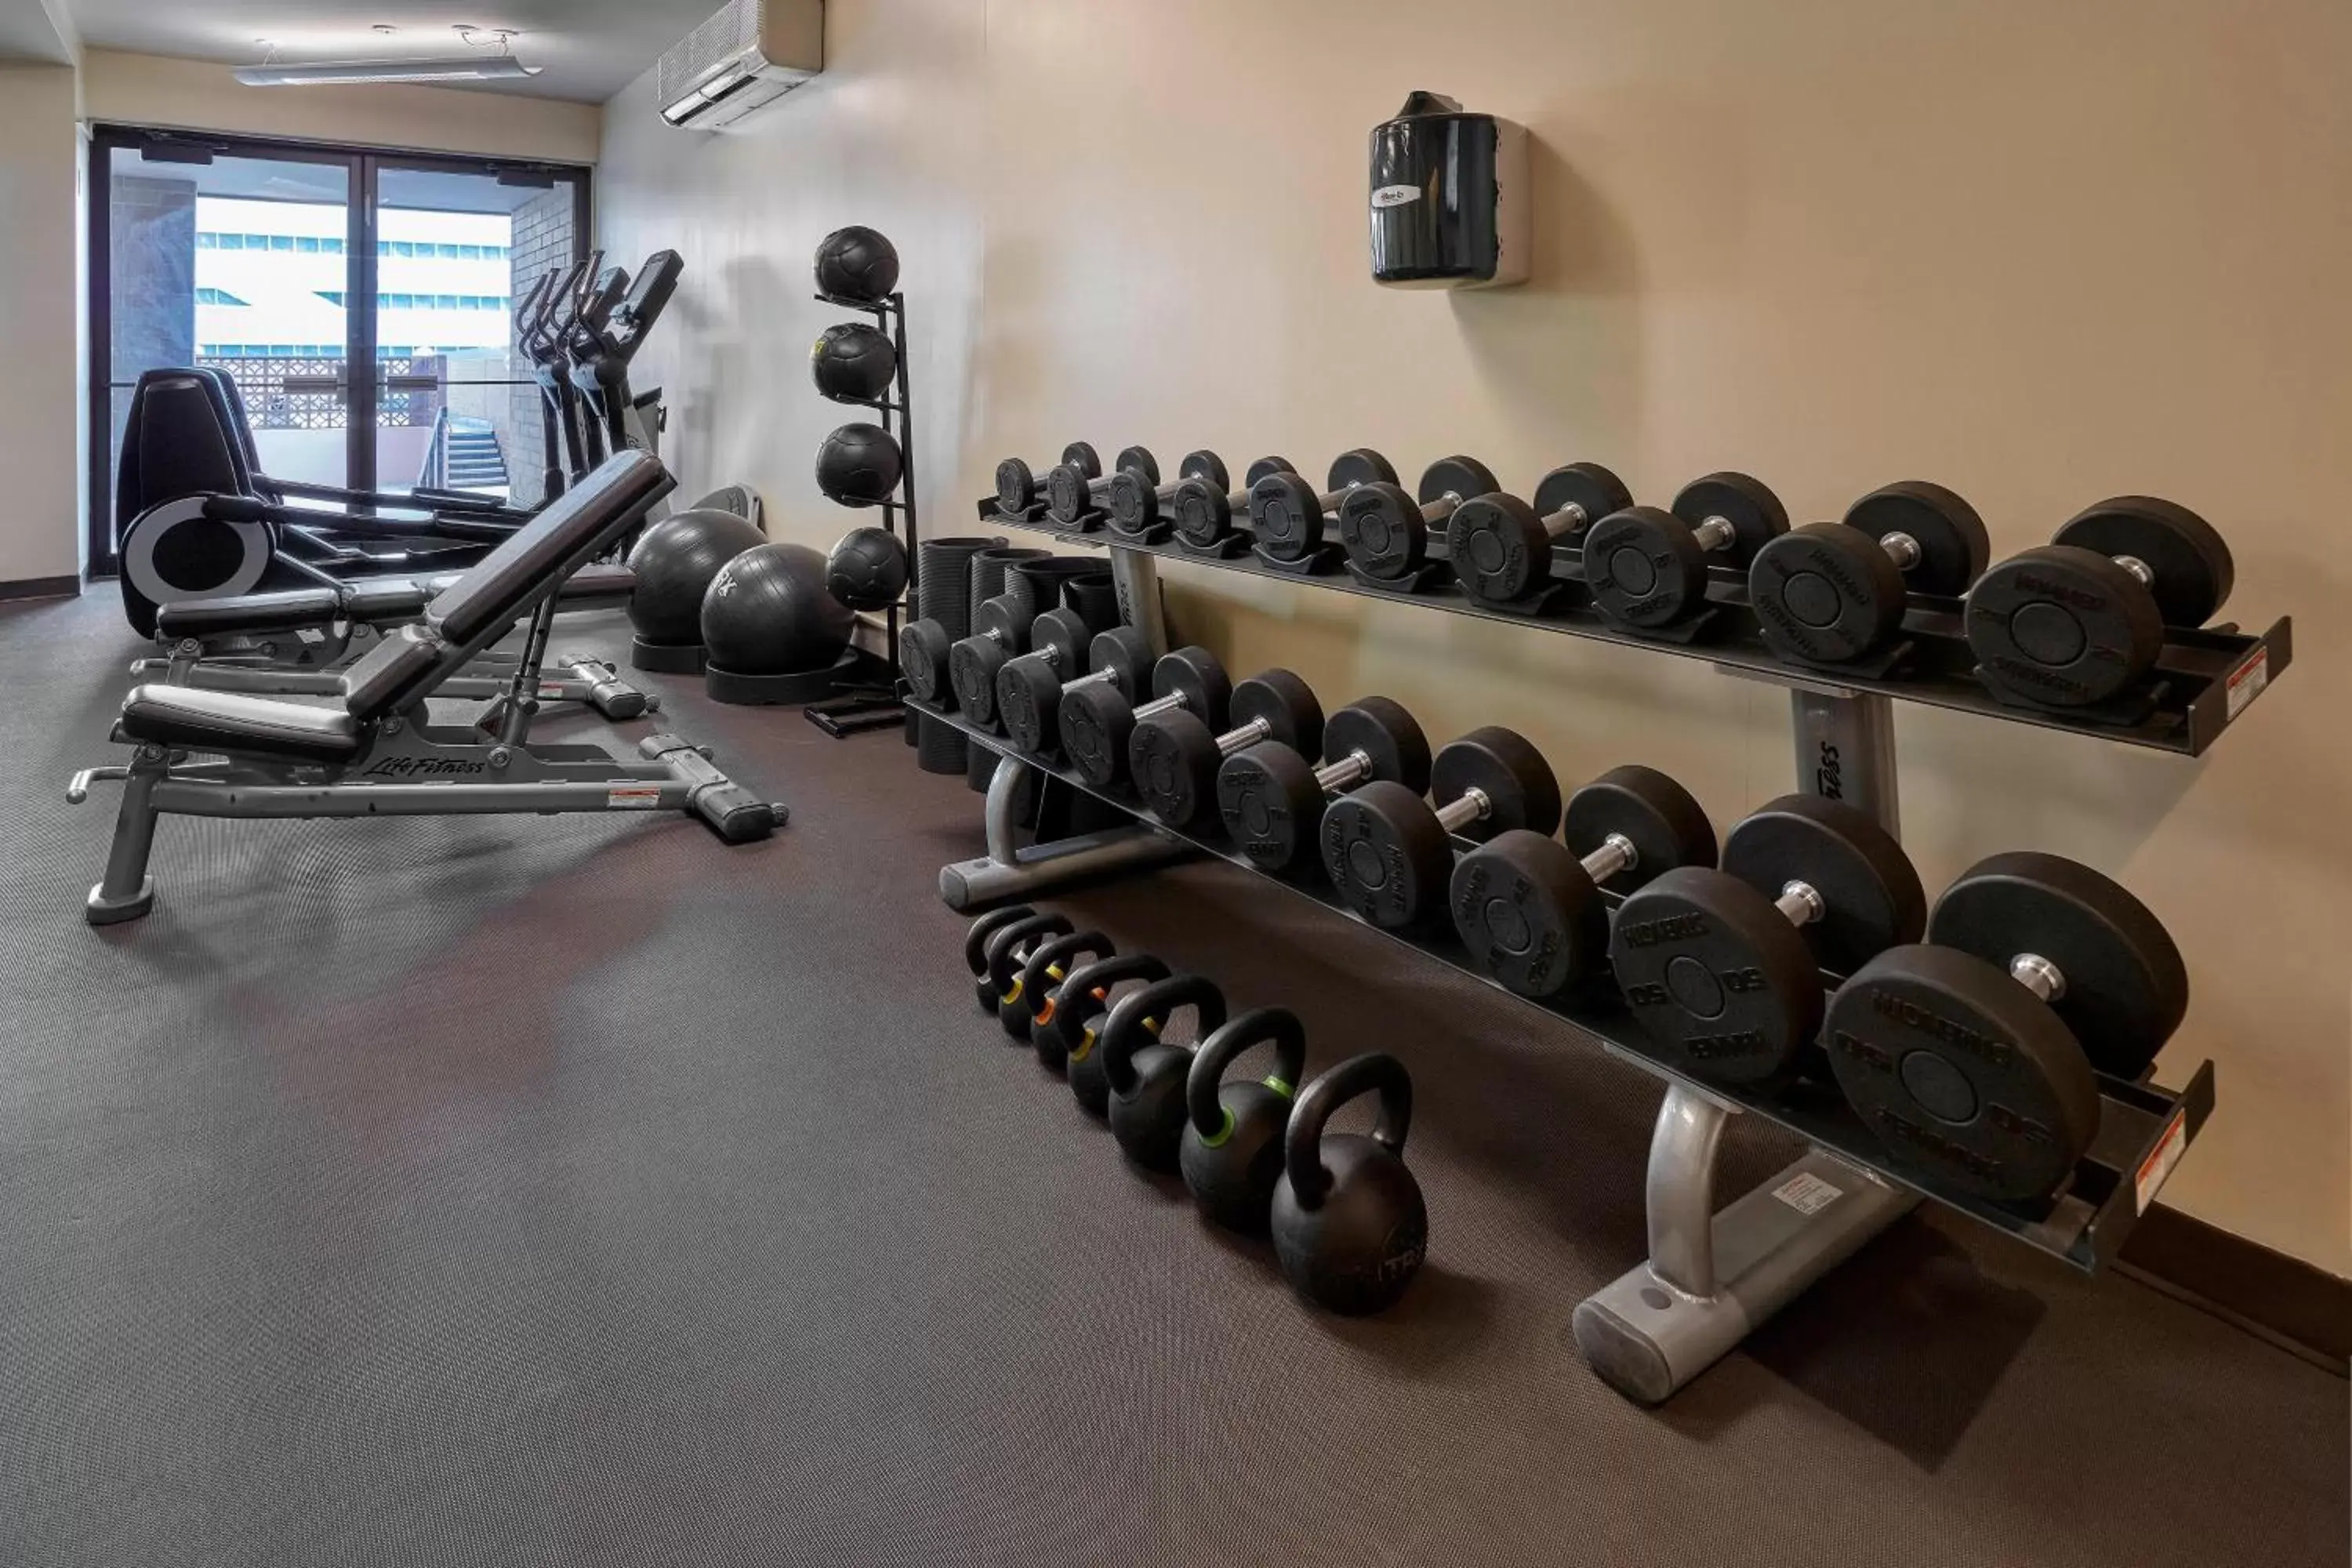 Fitness centre/facilities, Fitness Center/Facilities in The Westin Edmonton